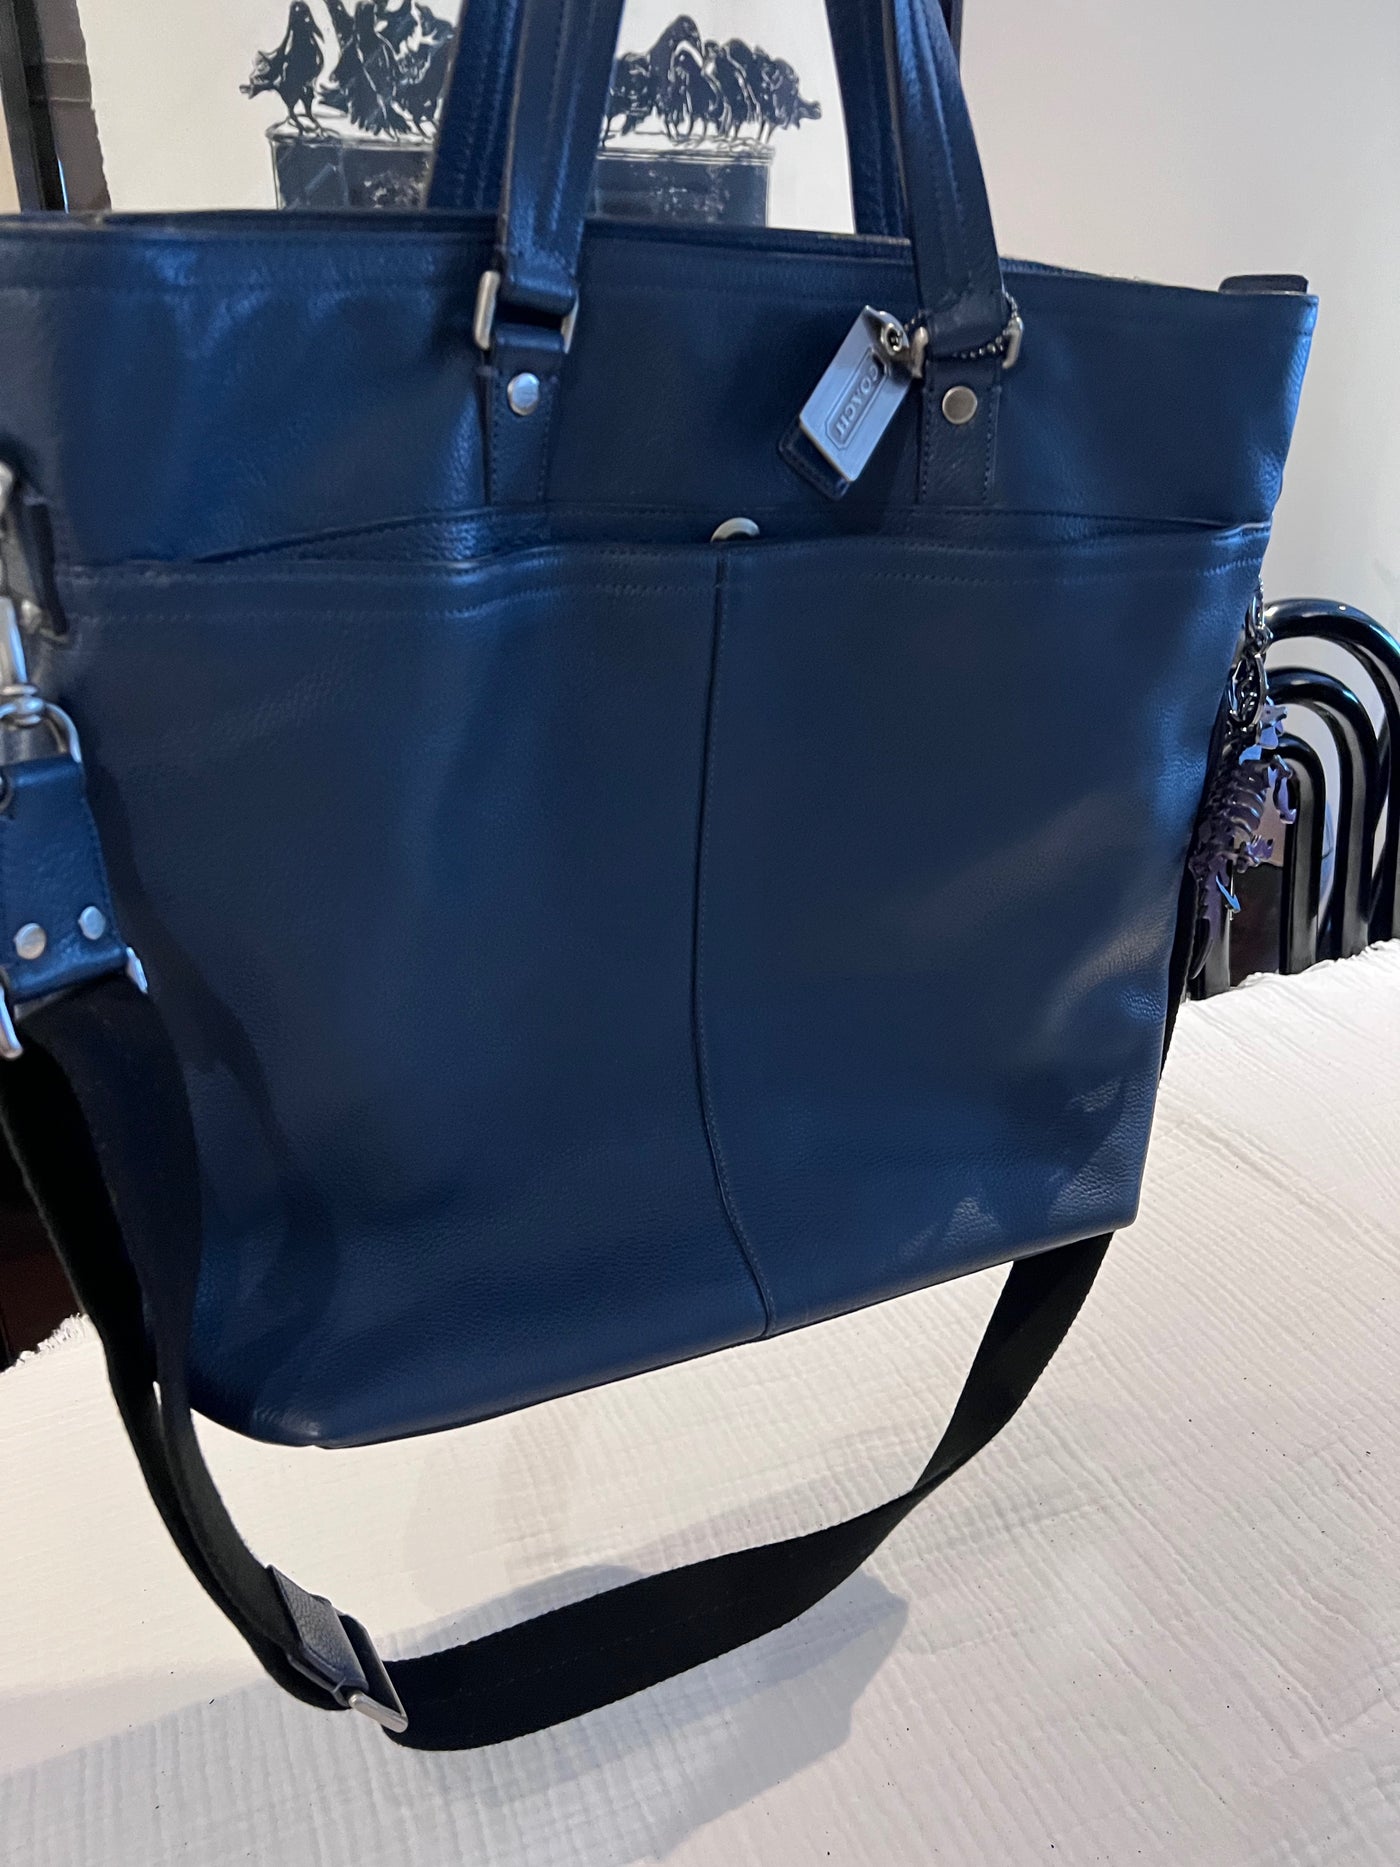 Coach - Navy Blue Coach Handbag - Perfect Condition on Designer Wardrobe